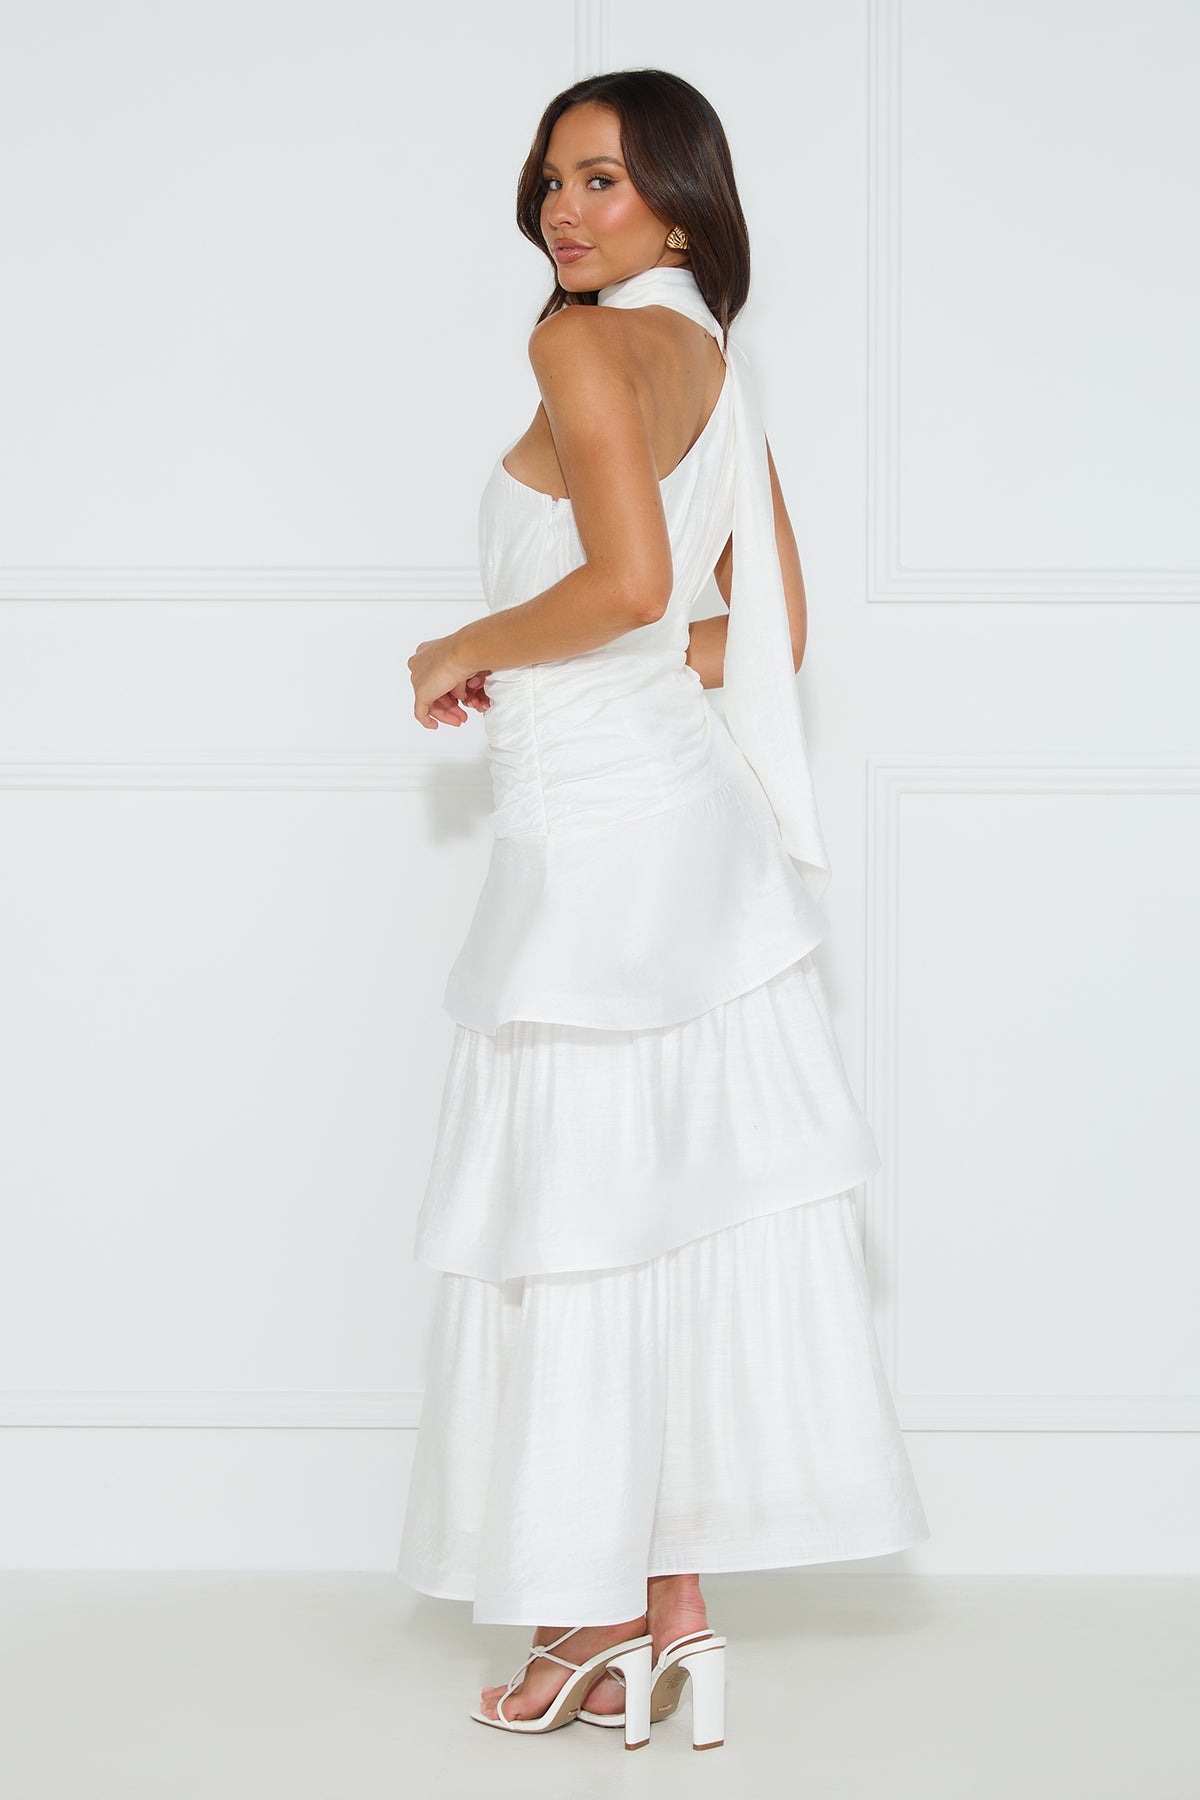 Shop Formal Dress - Cara One Shoulder Maxi Dress White sixth image